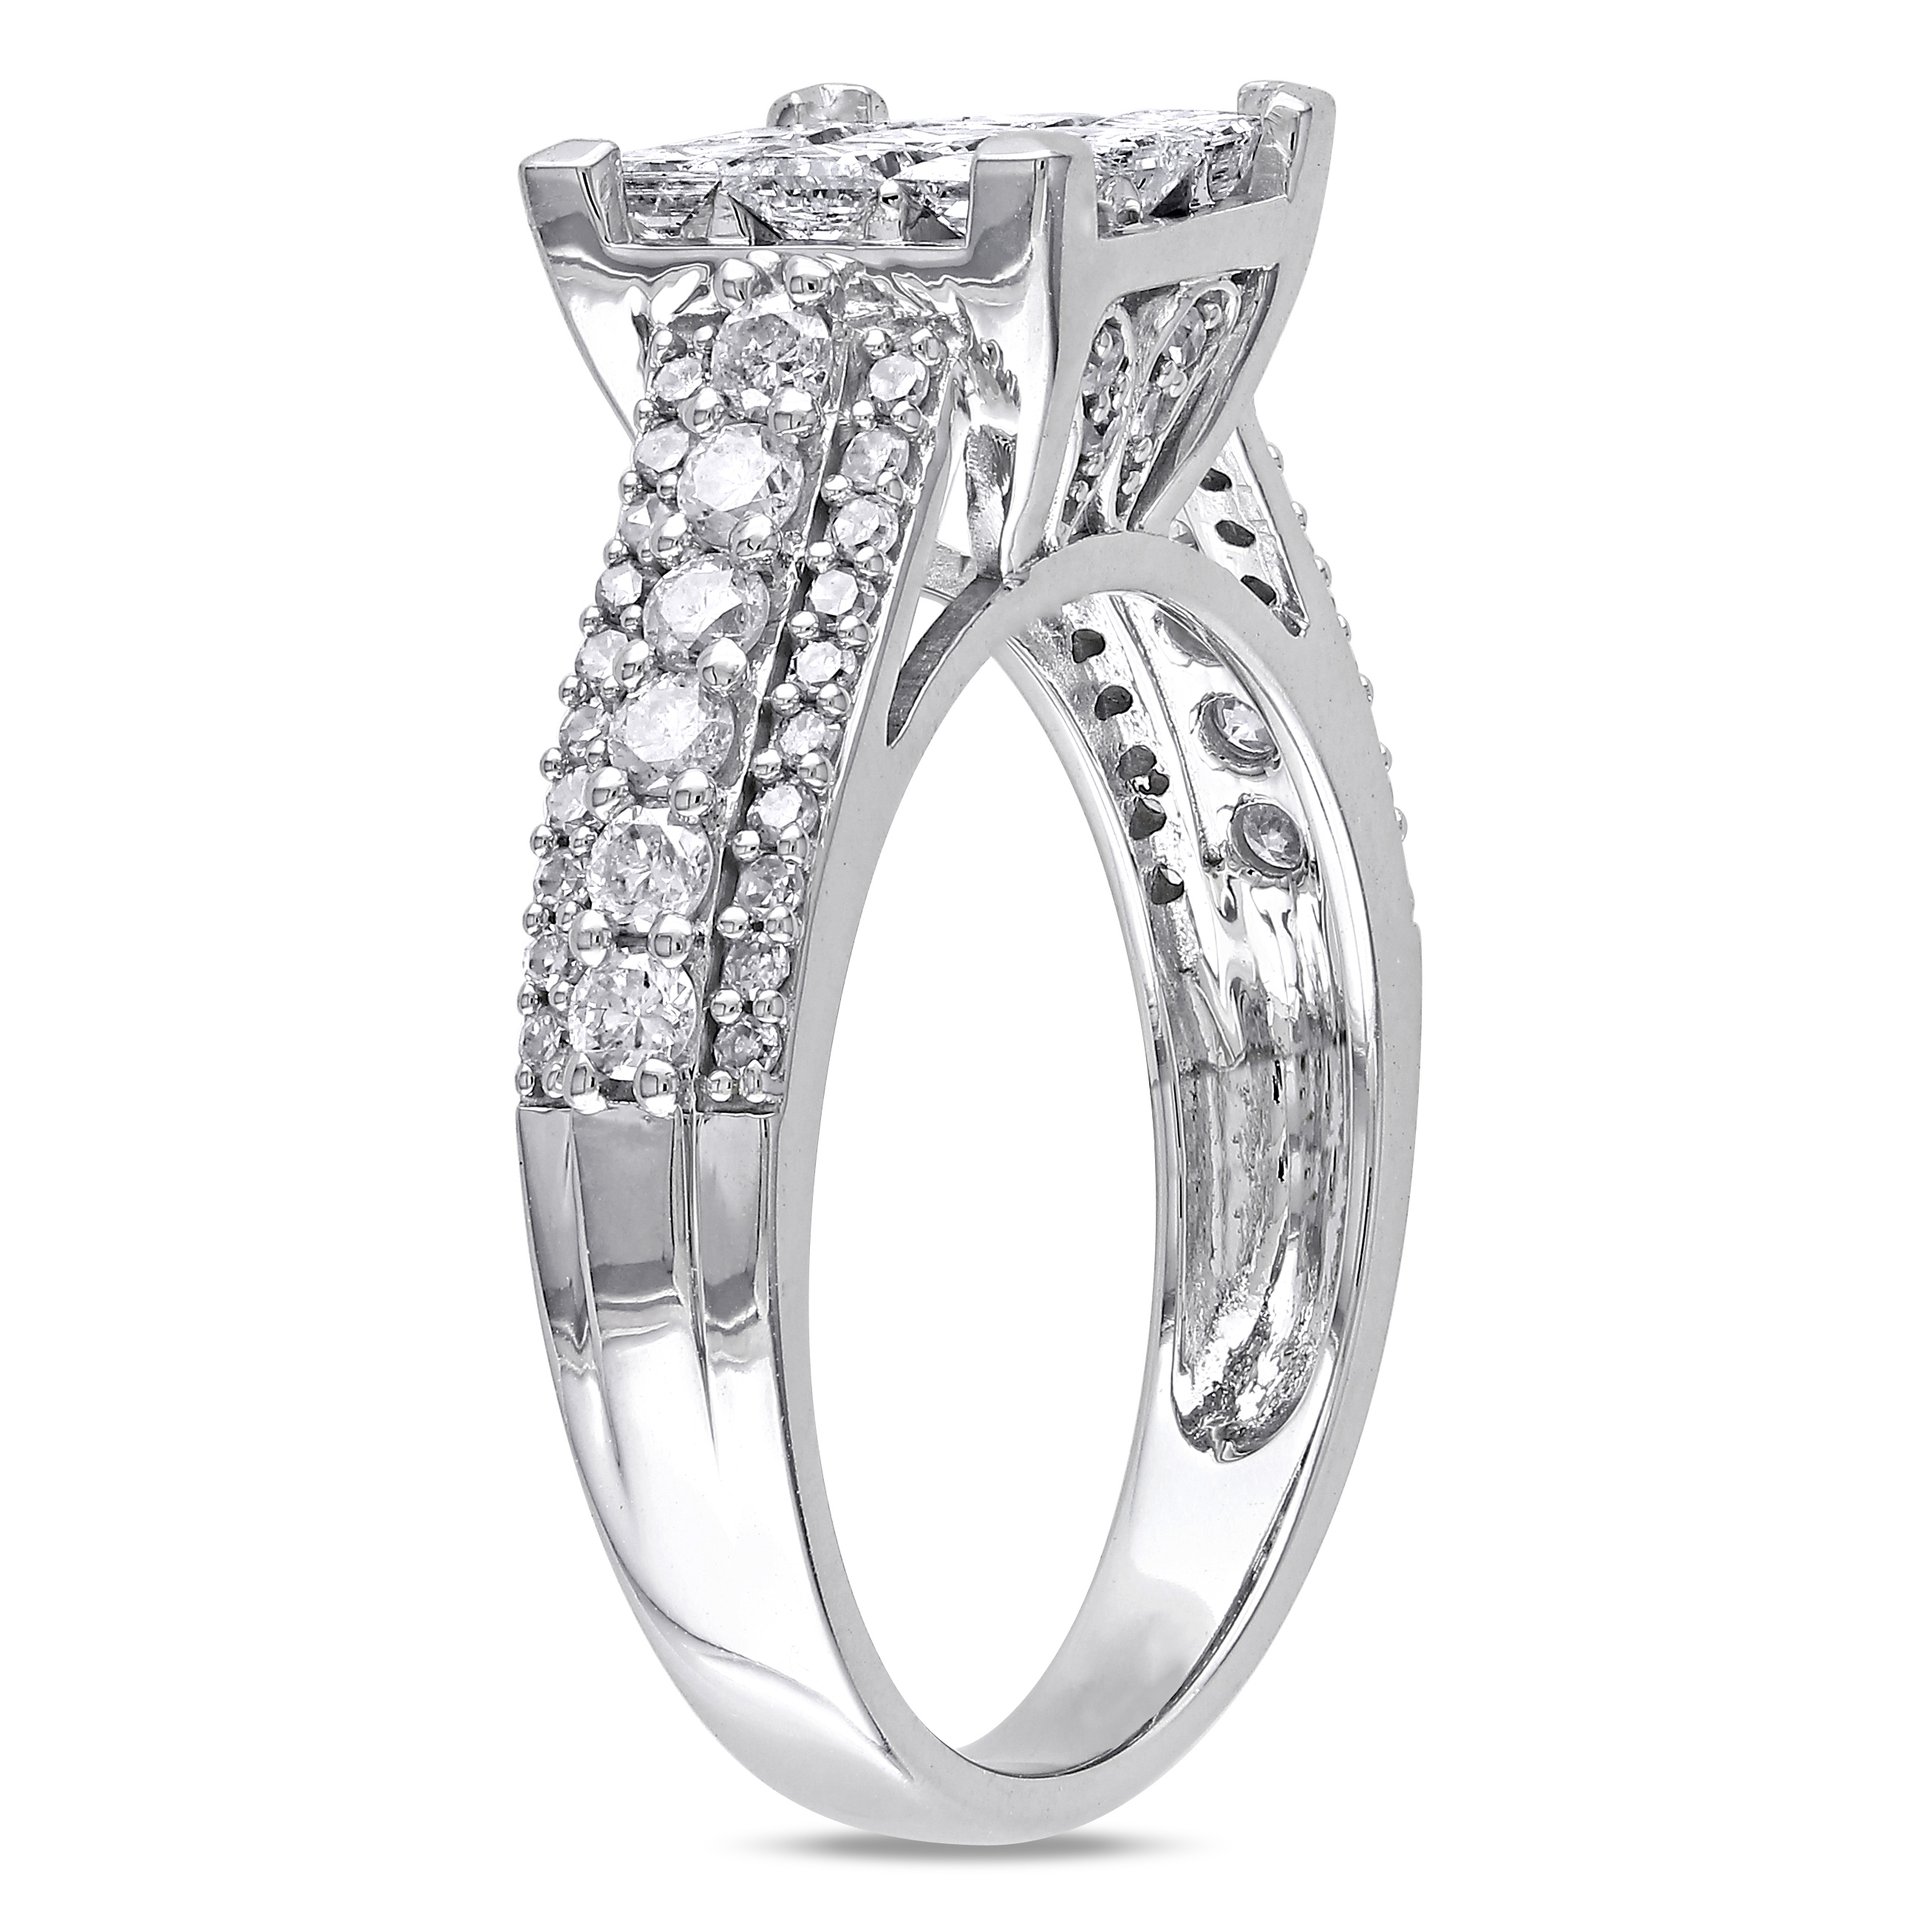 1 1/2 CT TW Princess Cut Diamond Engagement Ring in 10k White Gold